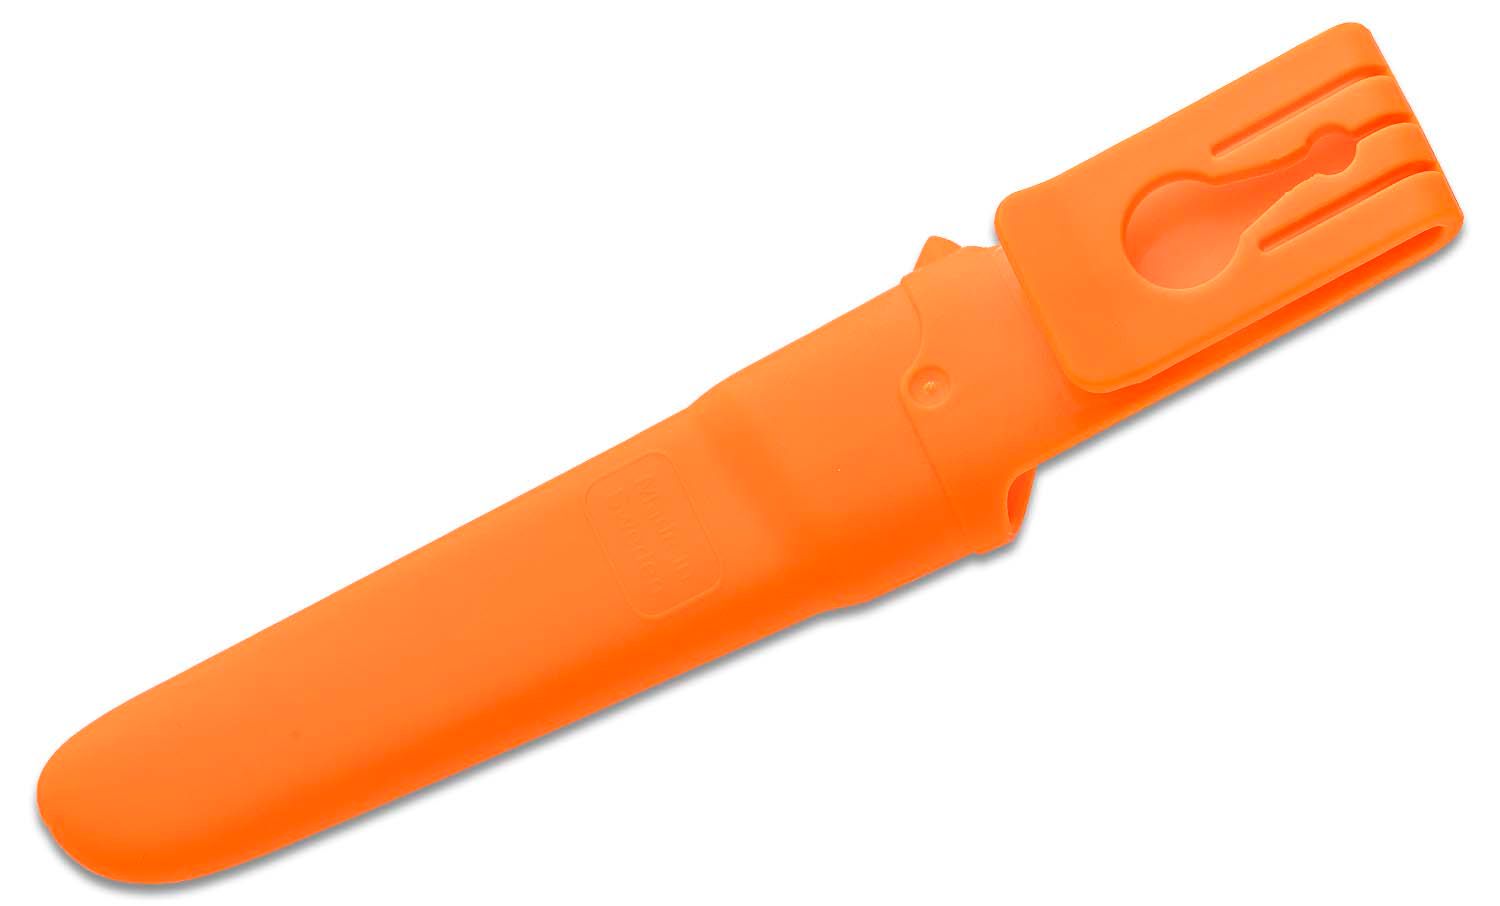 Morakniv Mora of Sweden Orange Companion Knife 4 Stainless Steel Blade,  Rubber Handle, Polymer Sheath - KnifeCenter - M-11824